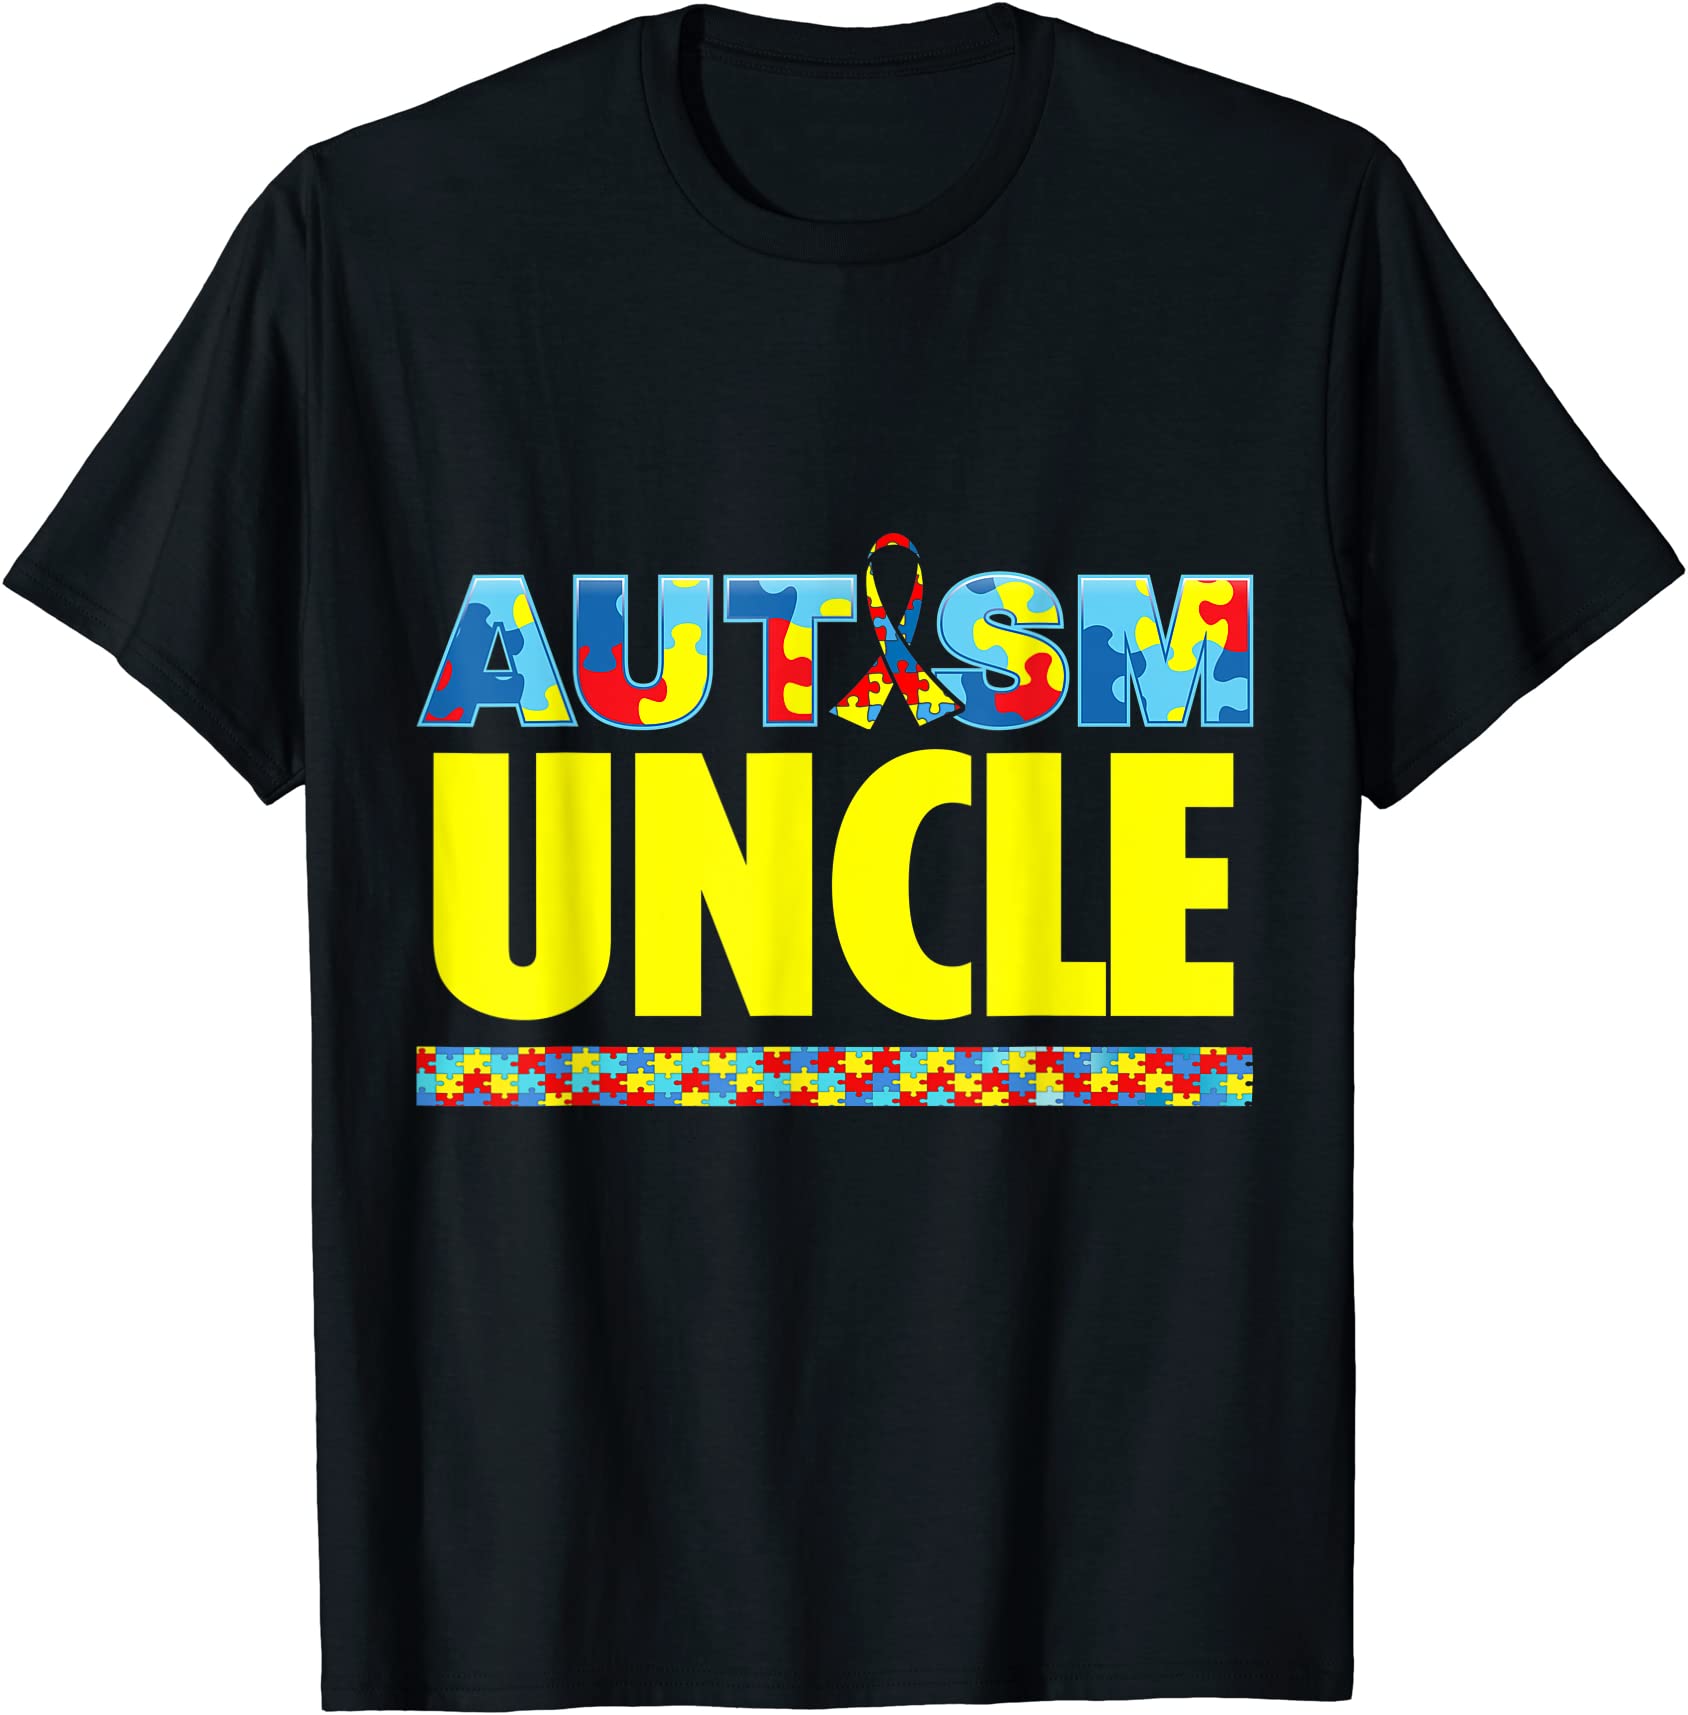 autism uncle awareness support t shirt men - Buy t-shirt designs